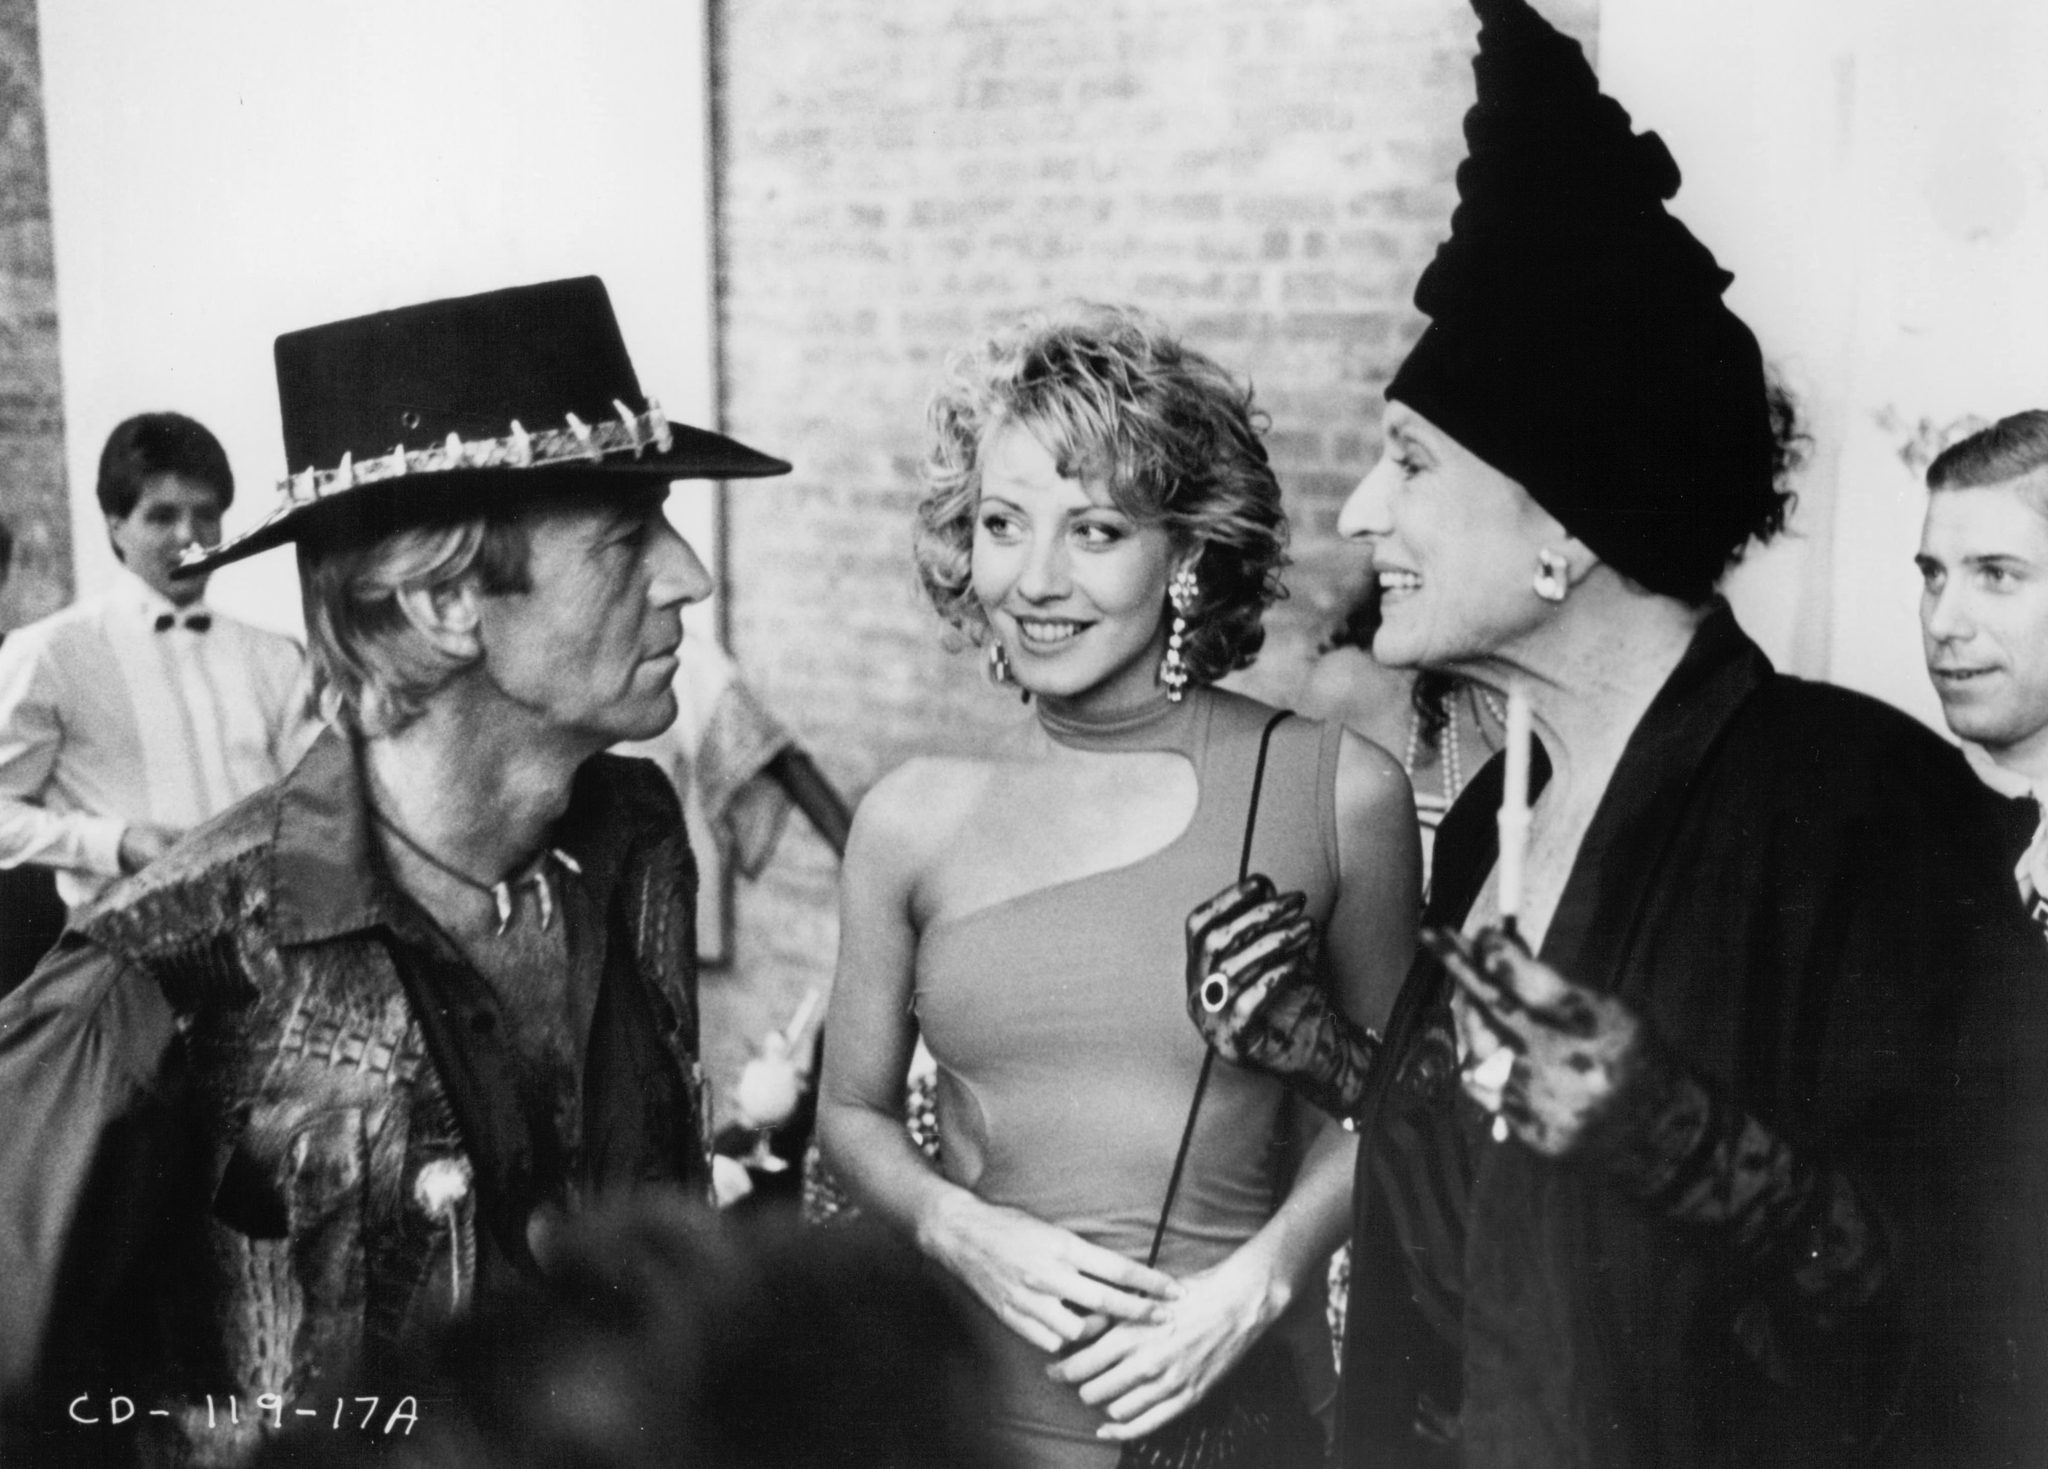 Paul Hogan, Anne Francine, and Linda Kozlowski in Crocodile Dundee (1986)